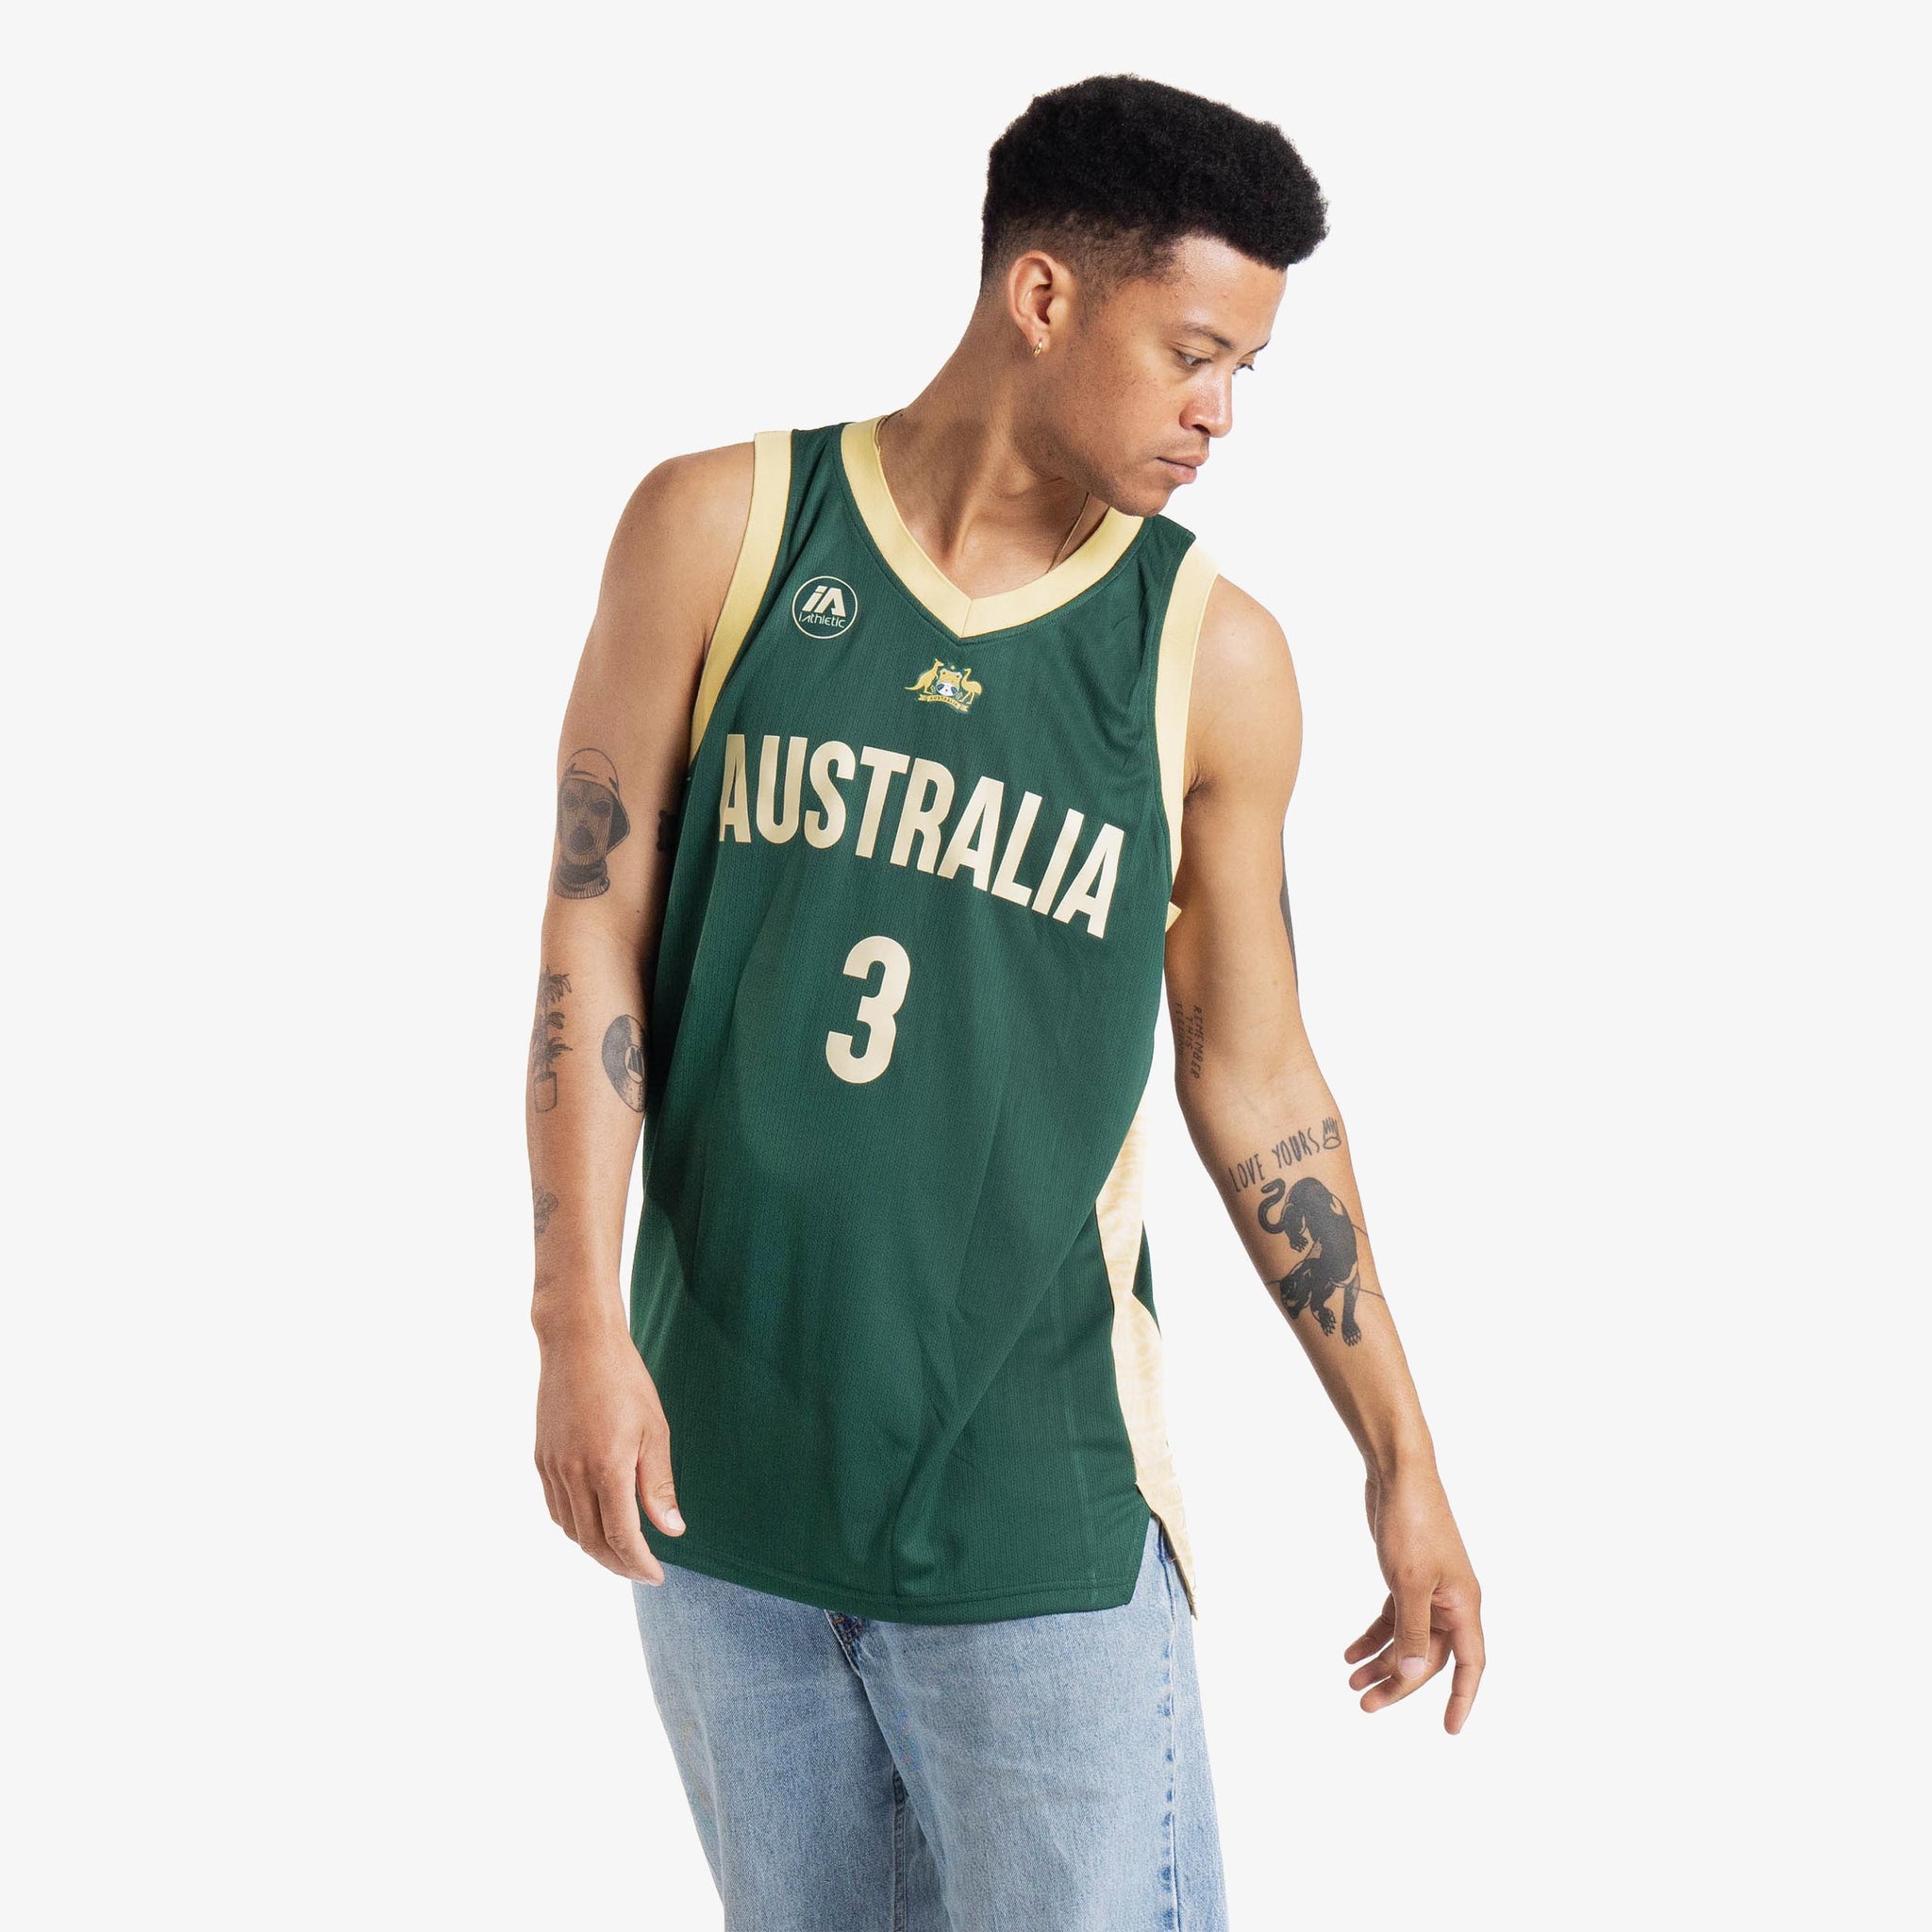 Josh Giddey fourth-most purchased NBA jersey in Australia